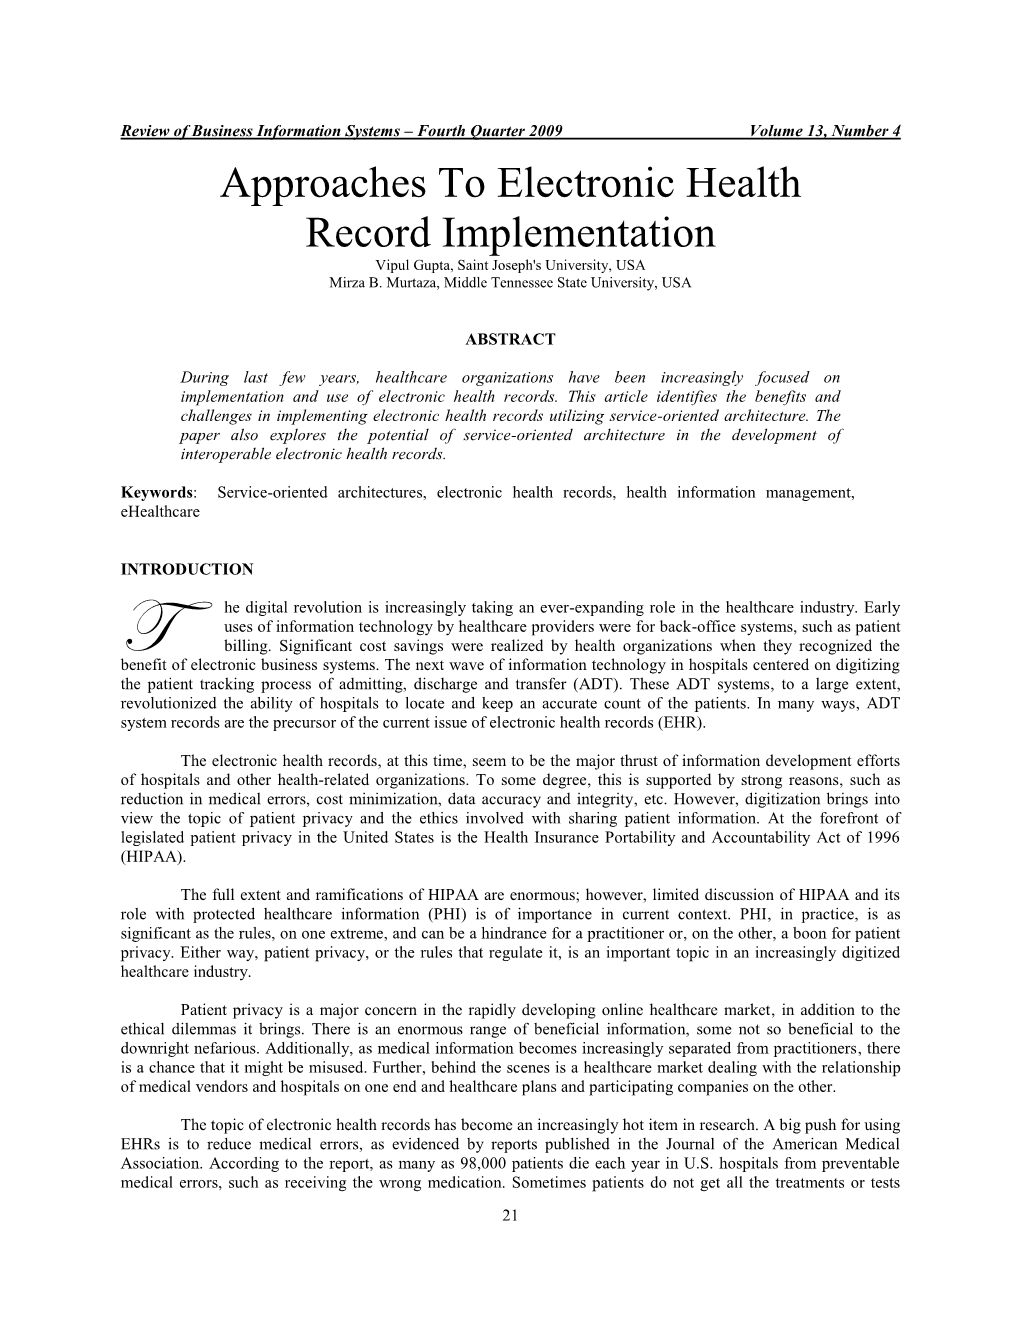 Approaches to Electronic Health Record Implementation Vipul Gupta, Saint Joseph's University, USA Mirza B